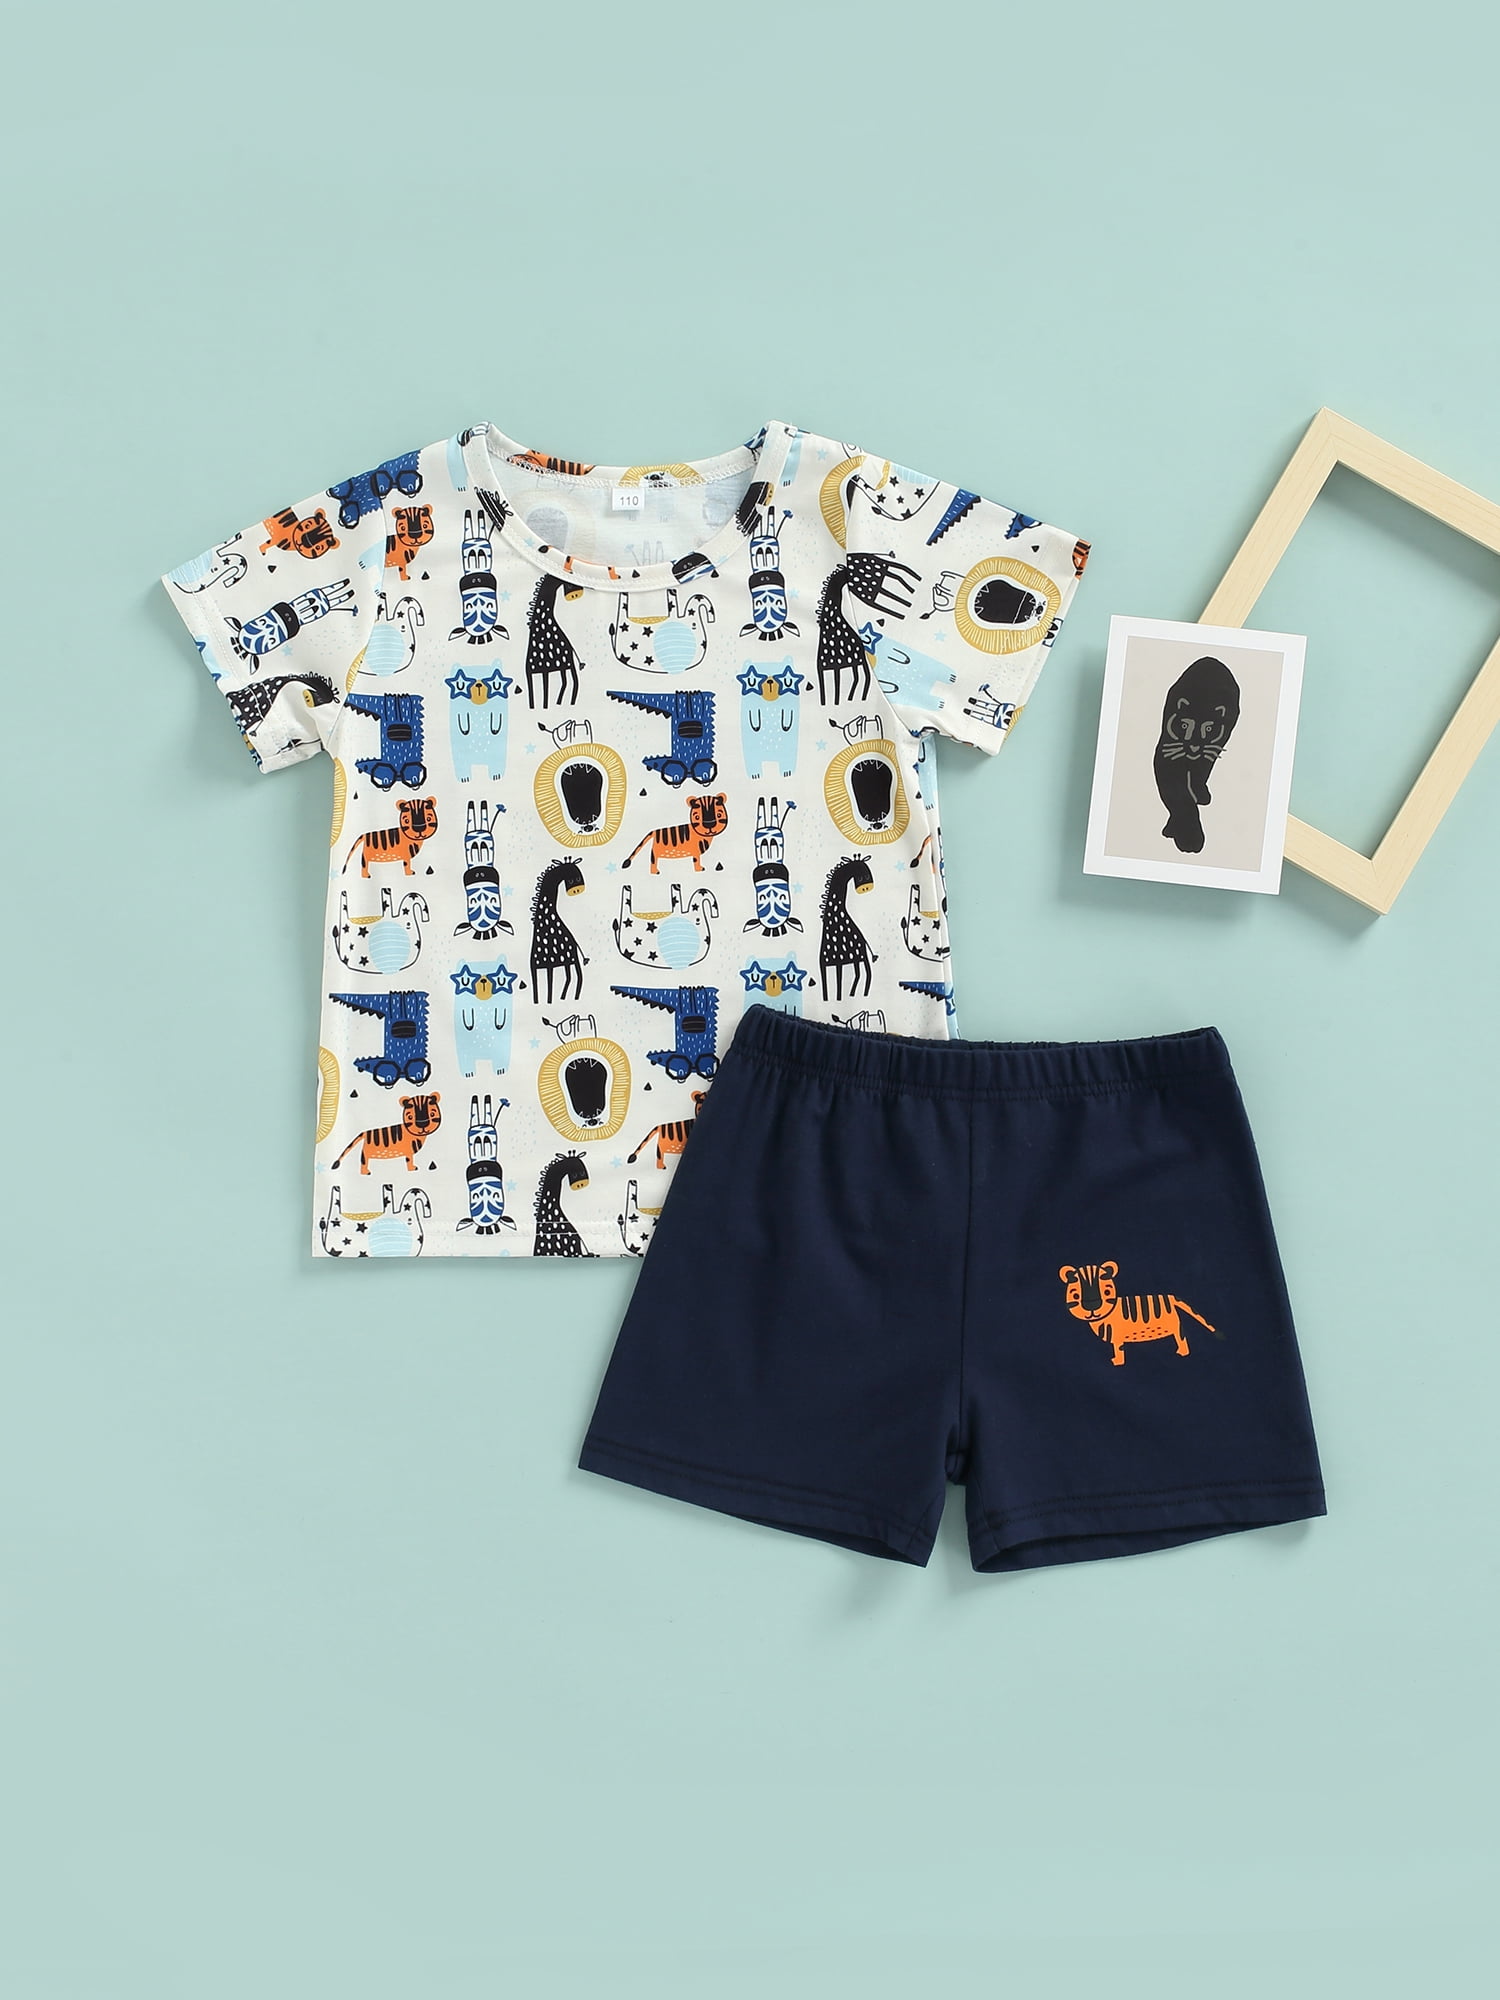 Toddler Baby Boys Casual Clothes Set Cartoon Vest Top Elastic Waistband Shorts 